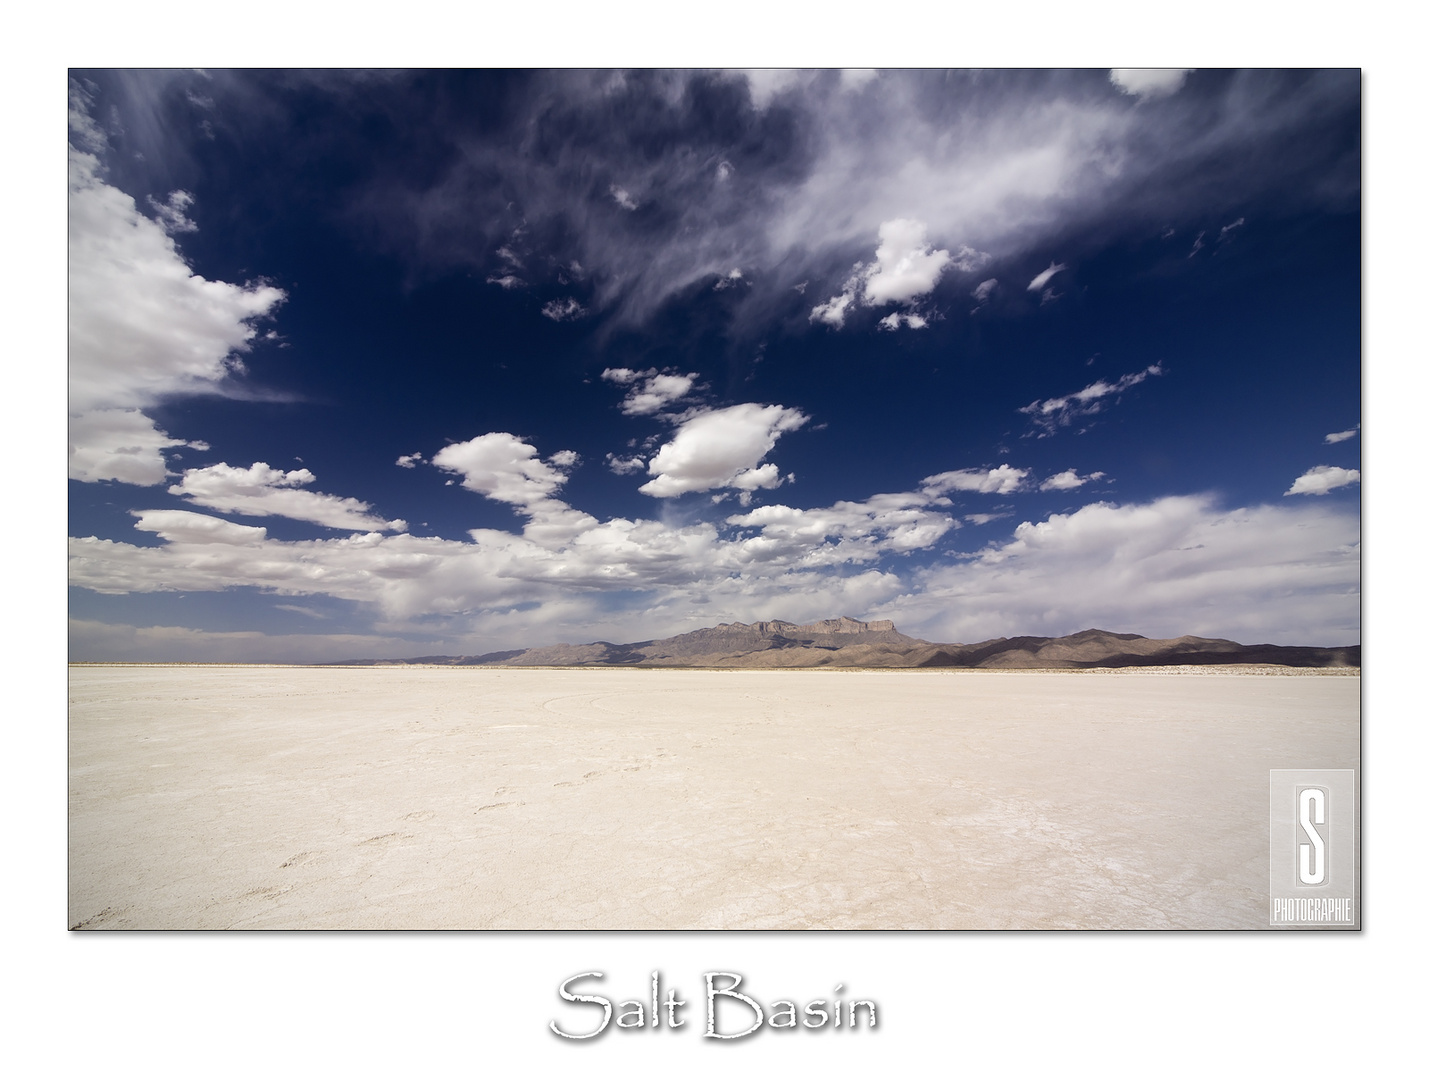 Salt Basin